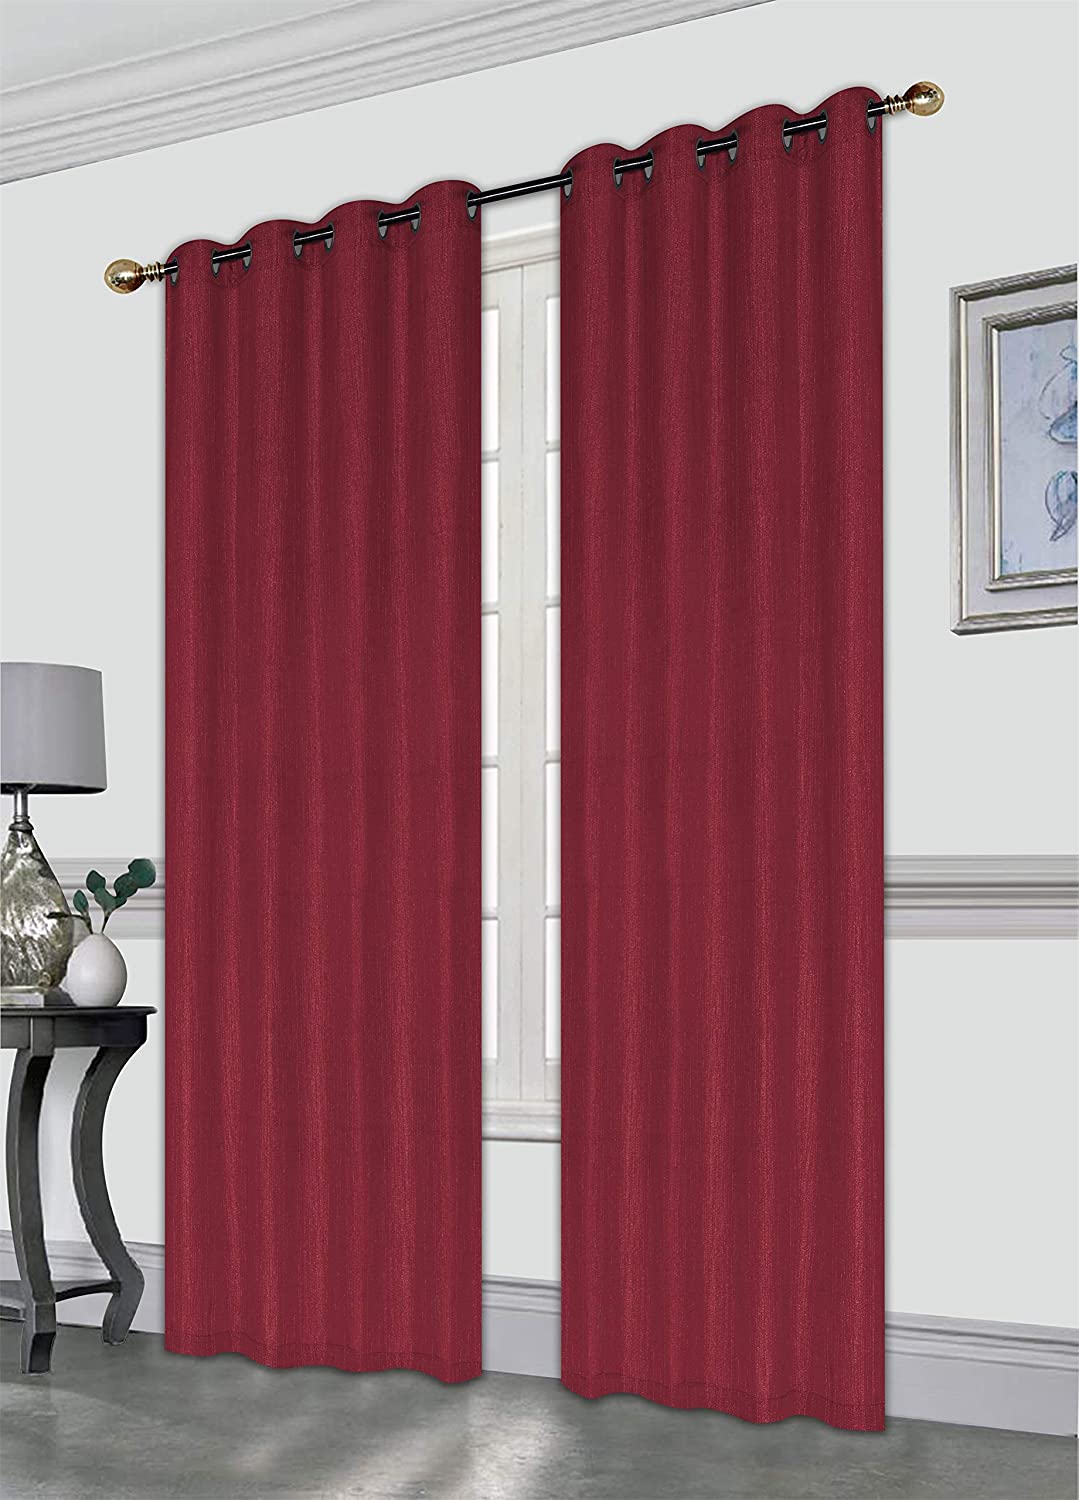 Kashi Home Gwen 52 x 84 in. Sparkle Metallic Single Curtain Panel - Linen Universe Co.